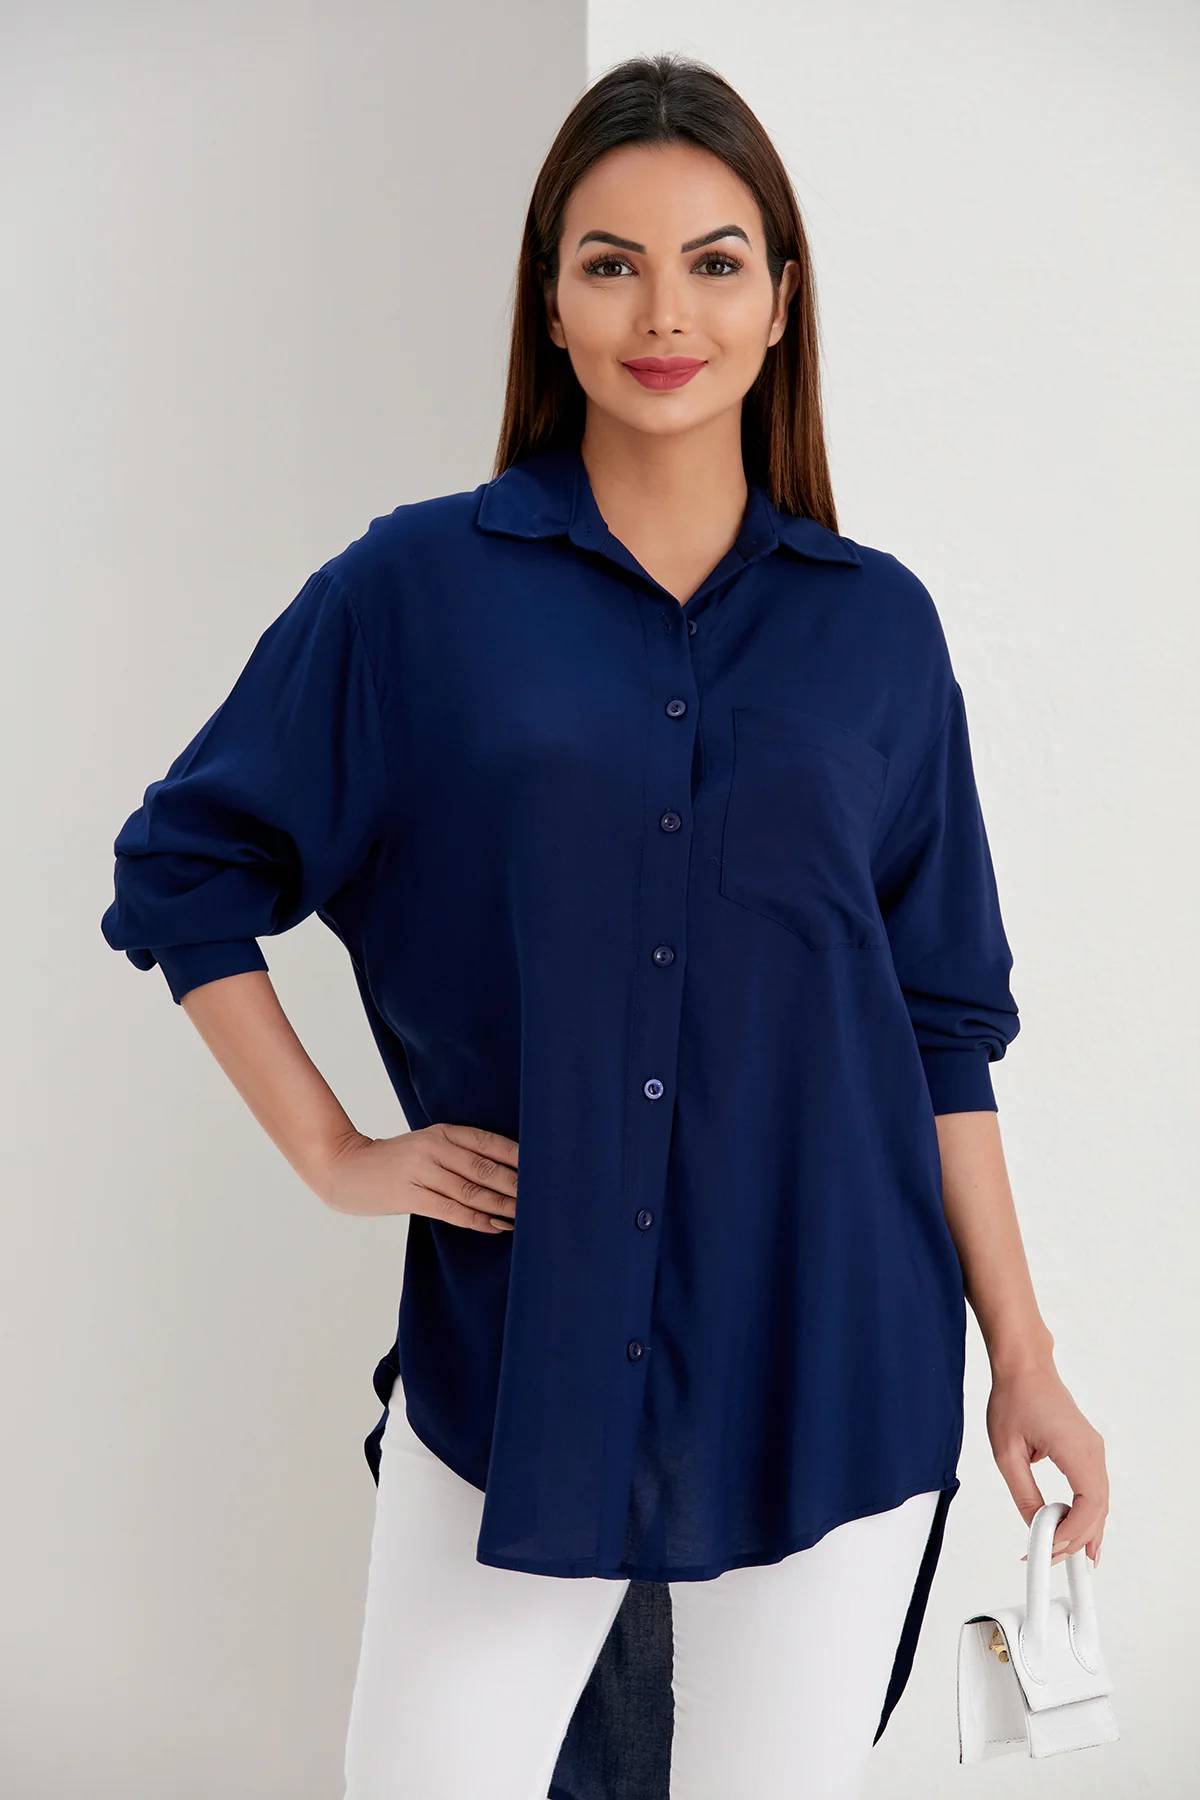 Wholesale Women's Long Sleeve Summer Relax Shirt Tunic Tops Tee